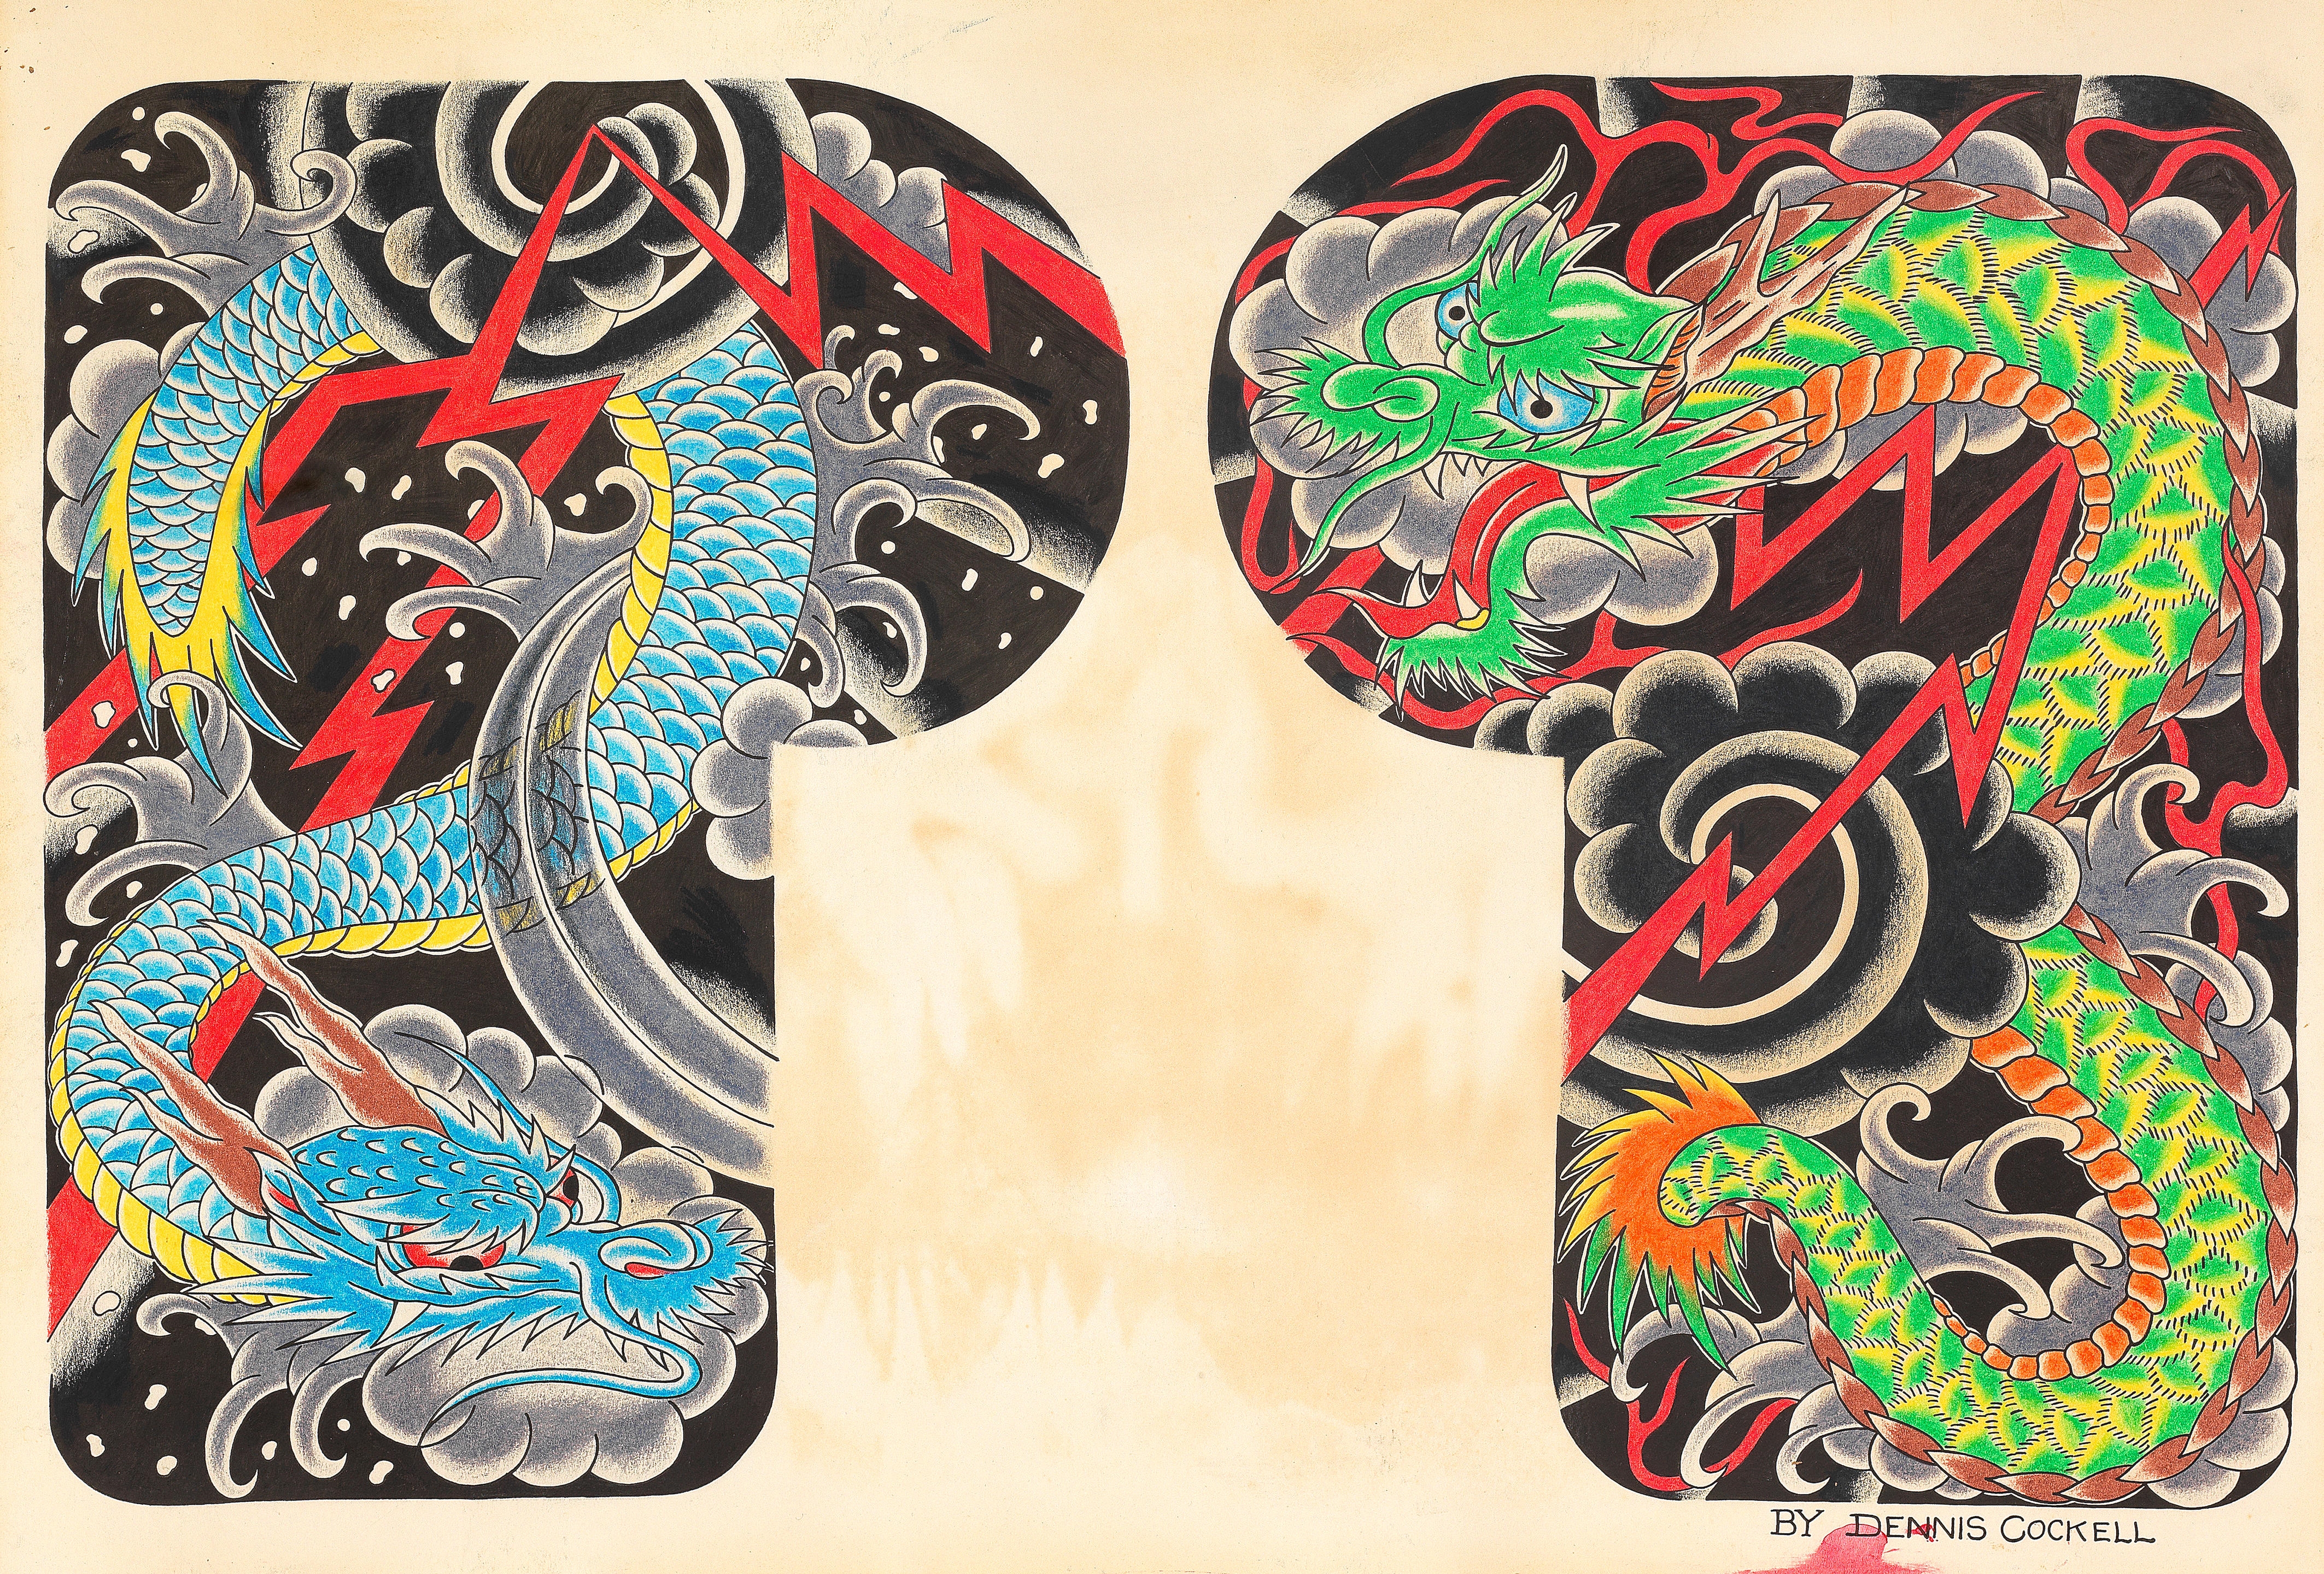 traditional japanese dragon tattoo flash